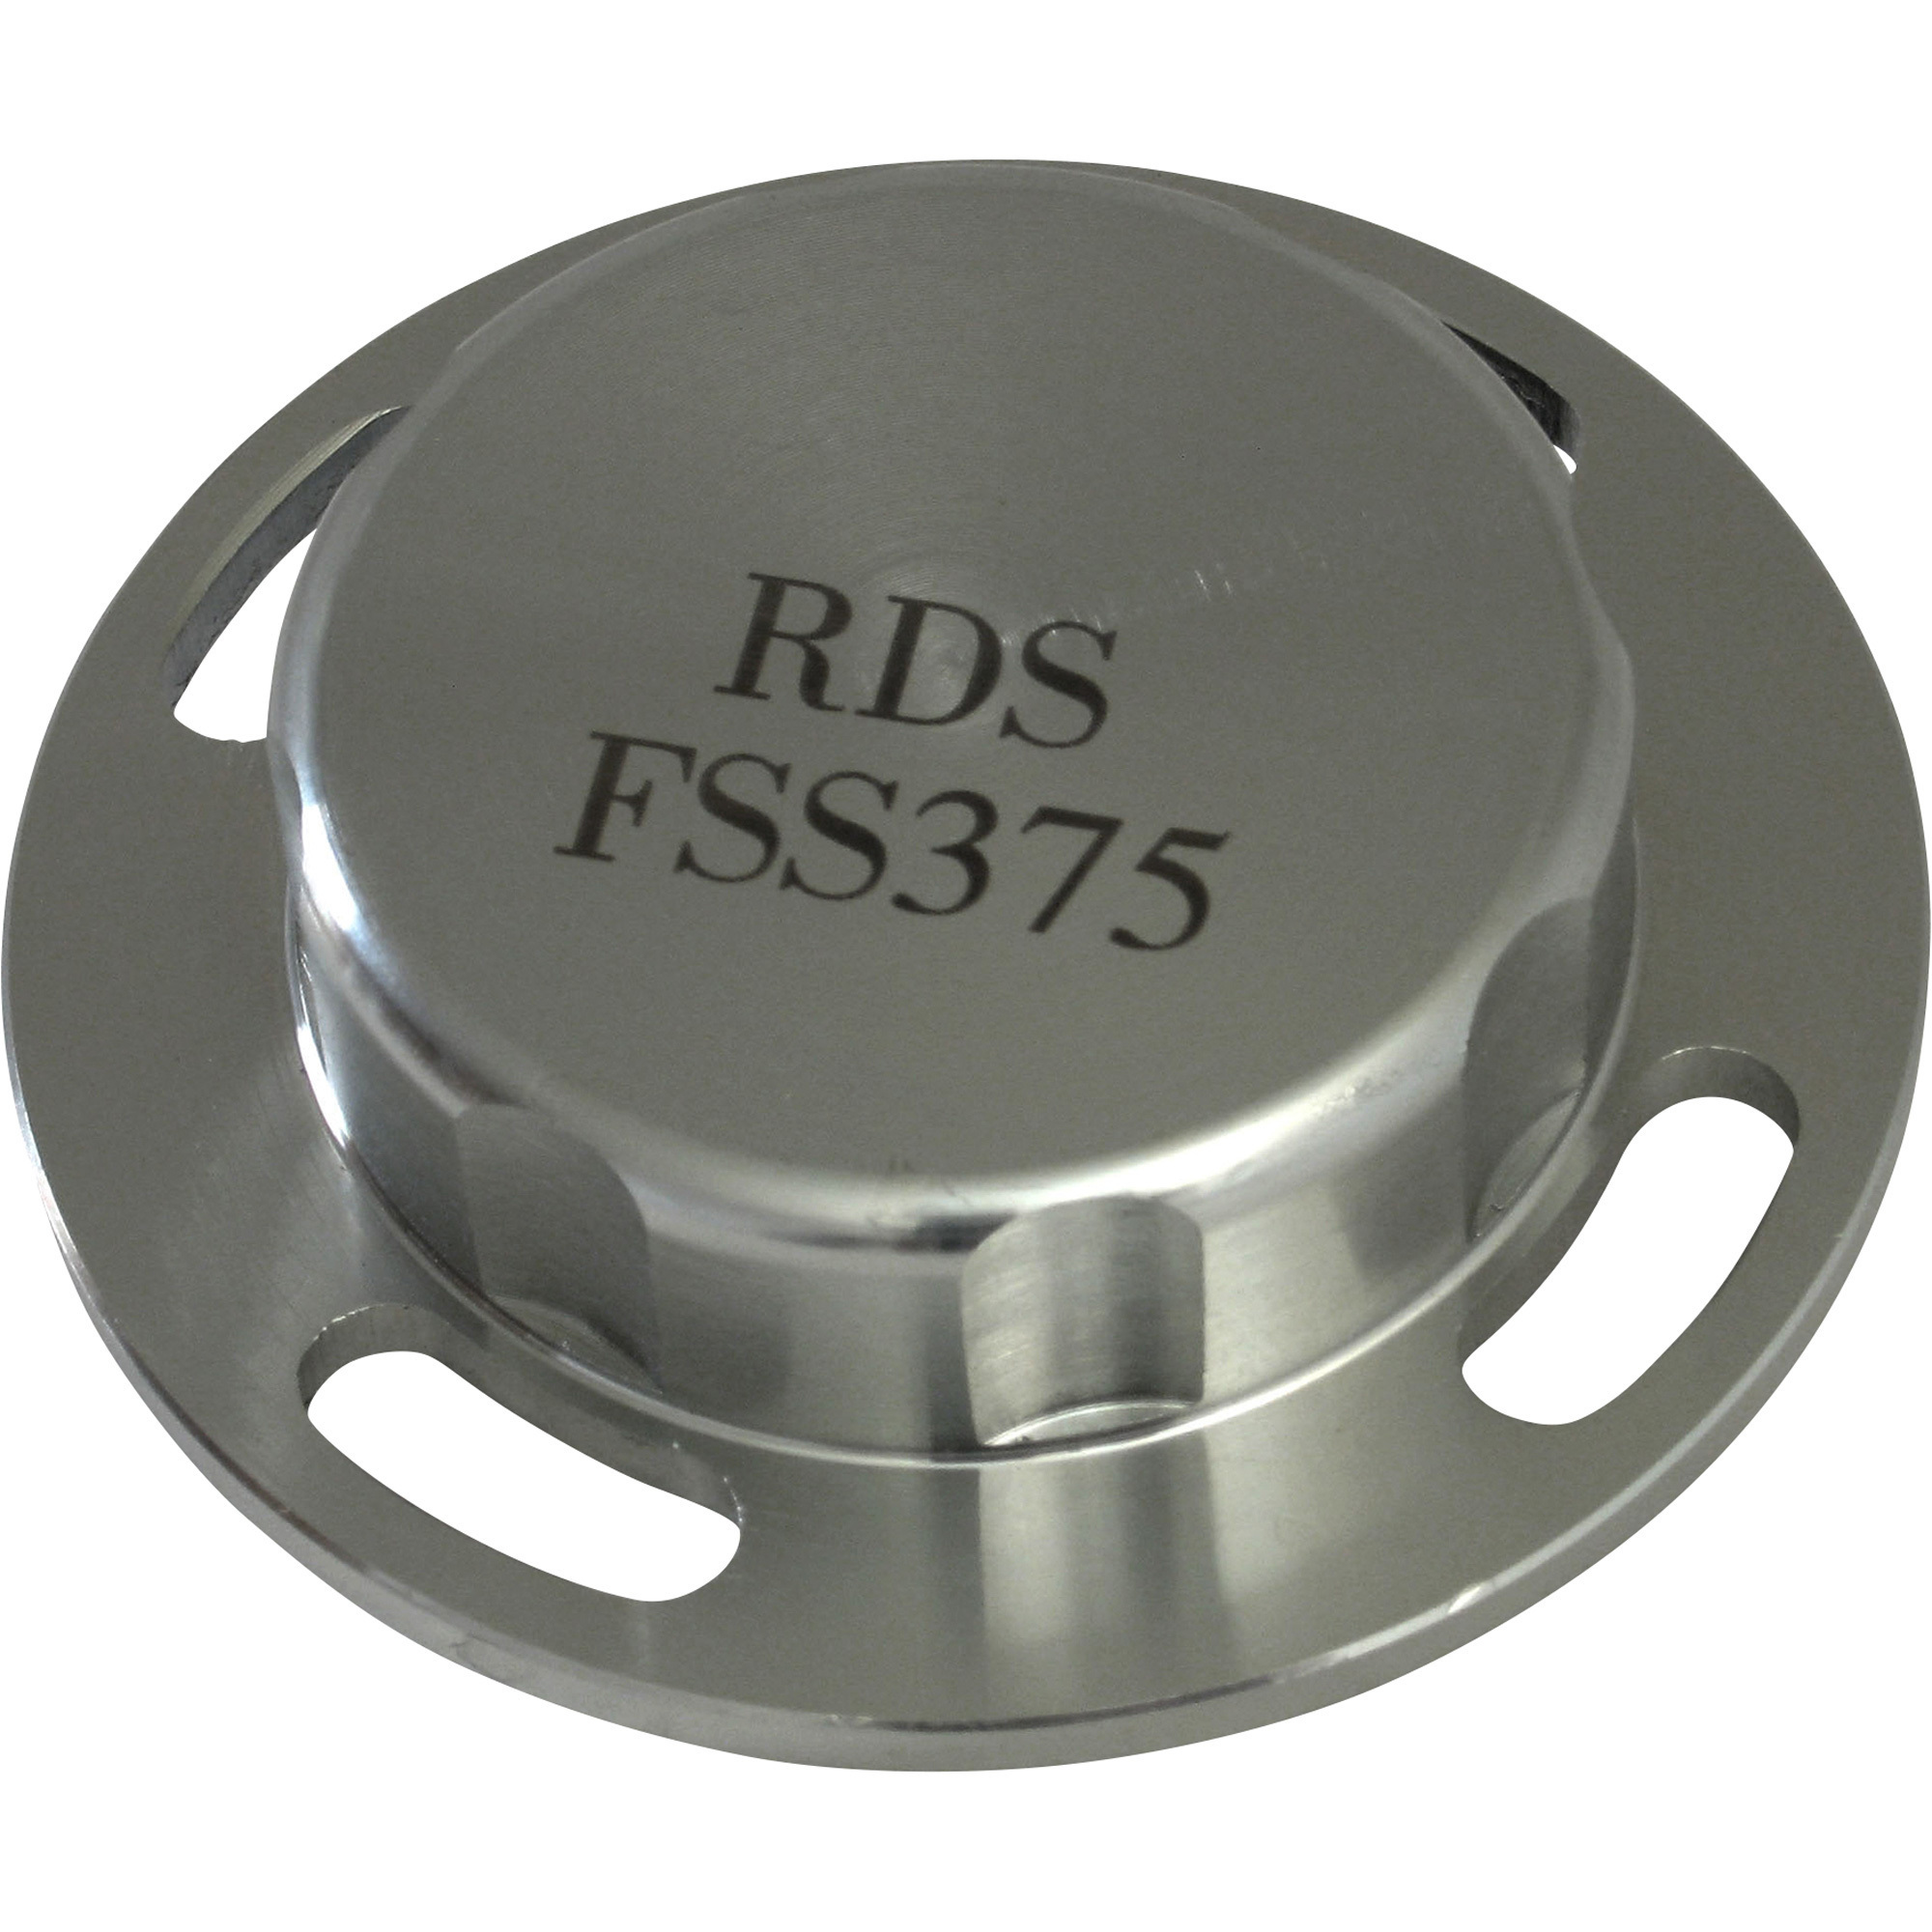 RDS Lockable Replacement Fuel Cap, Model 013690